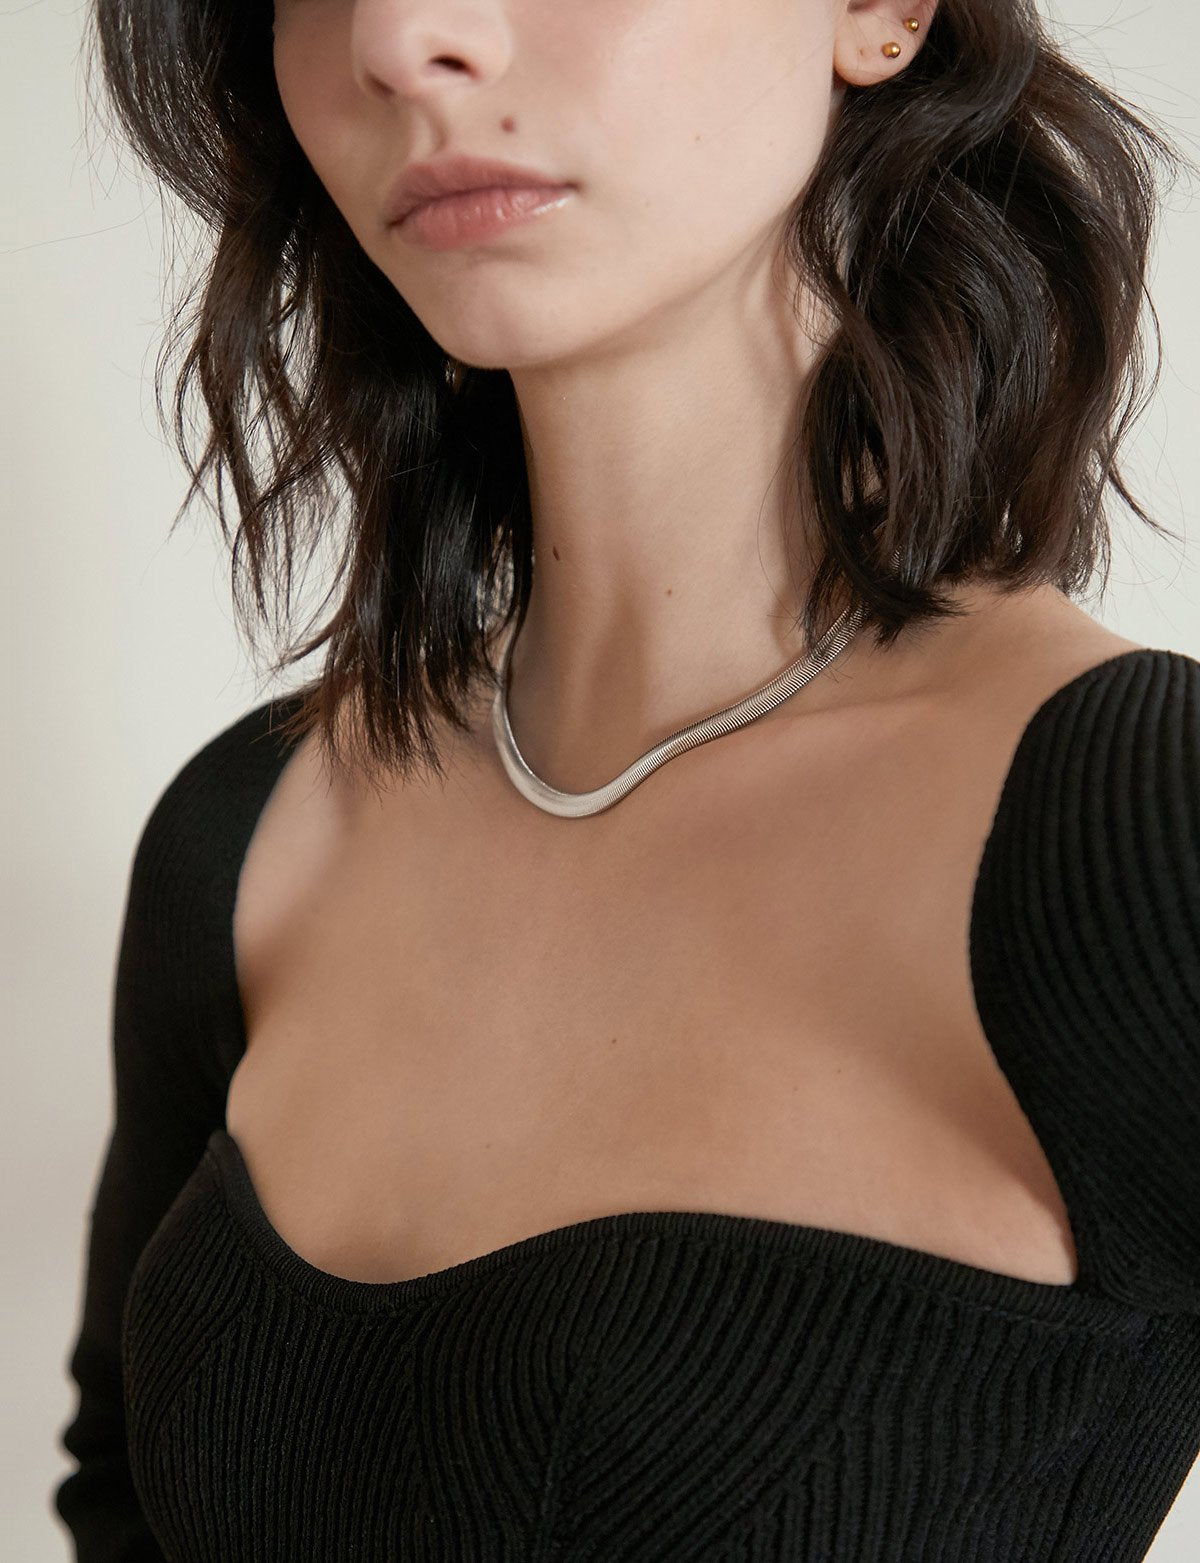 Chiara Knit Bustier Top in Black-BESTSELLER